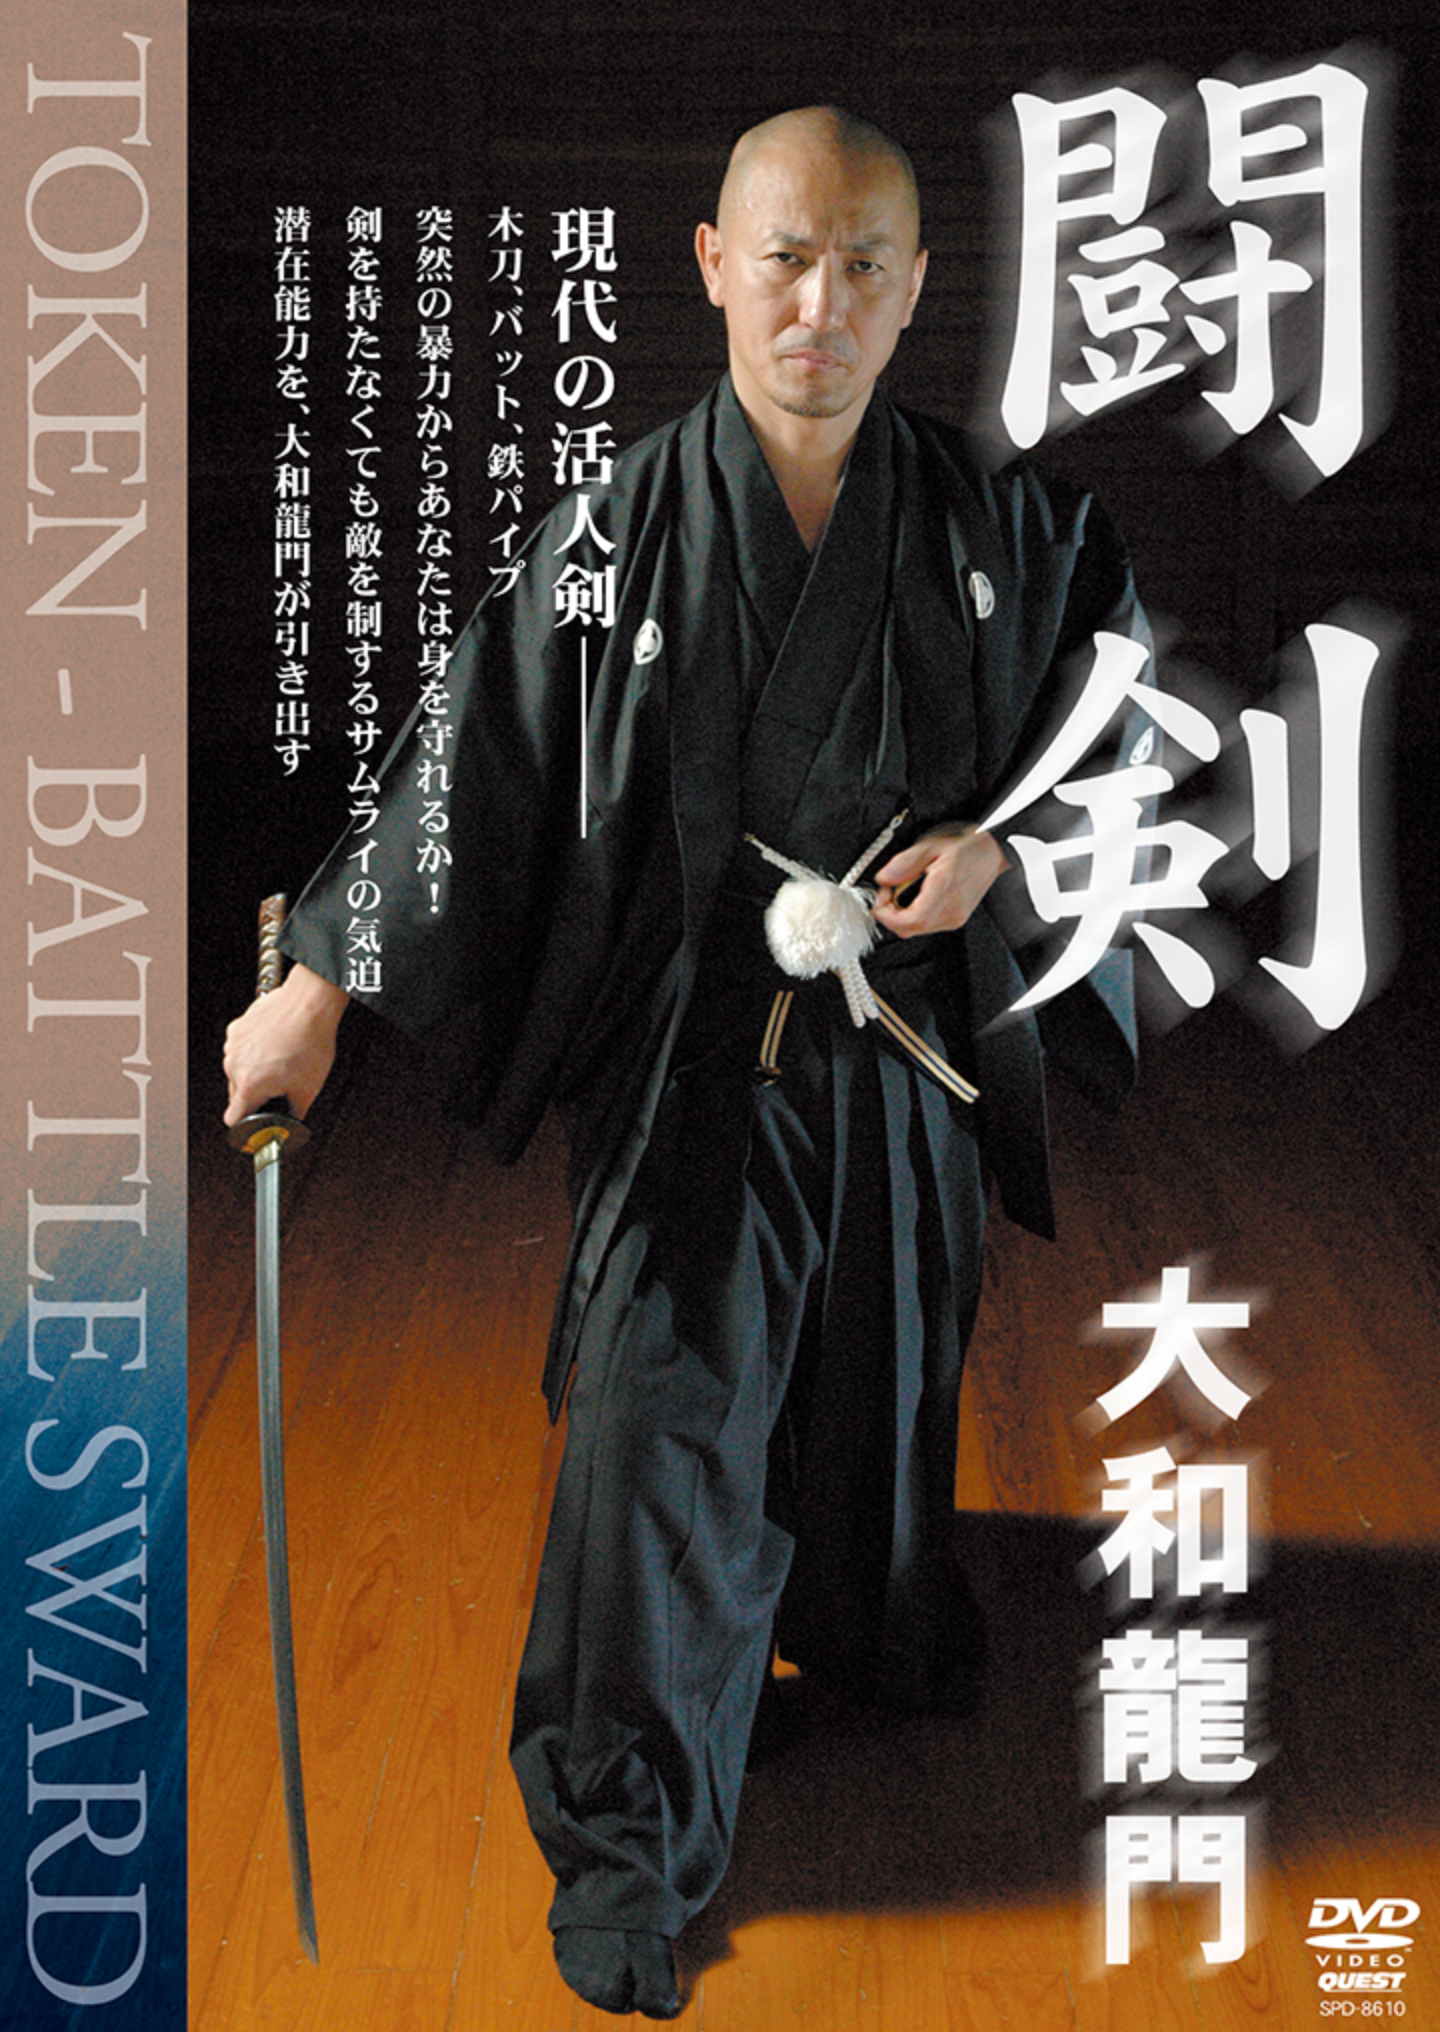 Token - Battle Sword DVD by Ryumon Yamato - Budovideos Inc